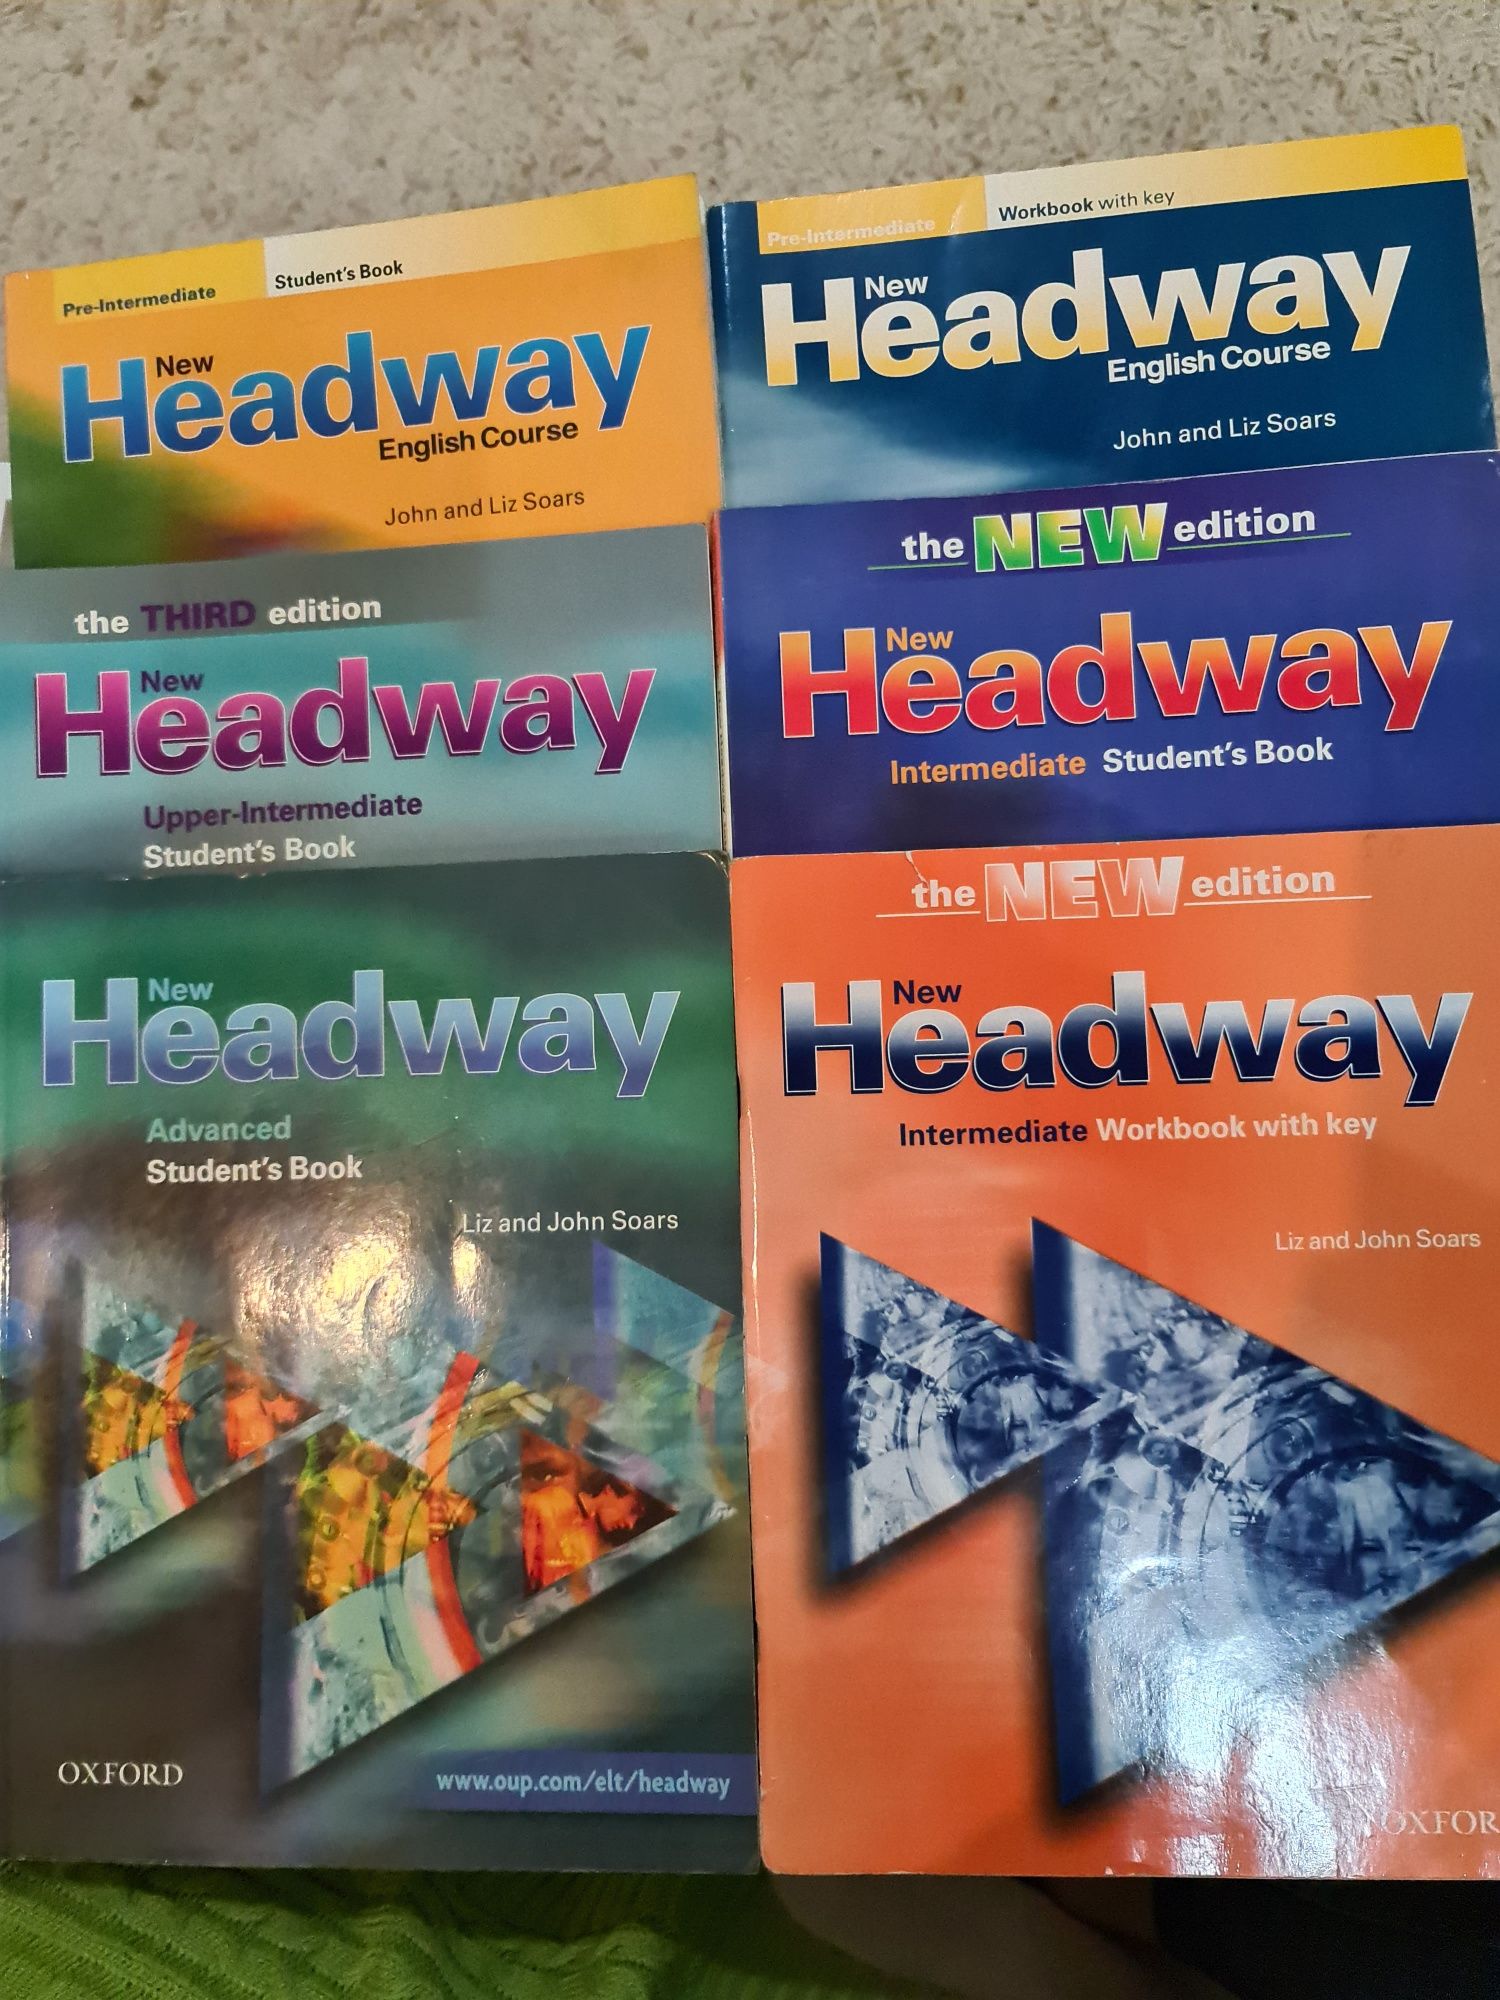 Учебники англ языка Headway. INSIDE AND OUT